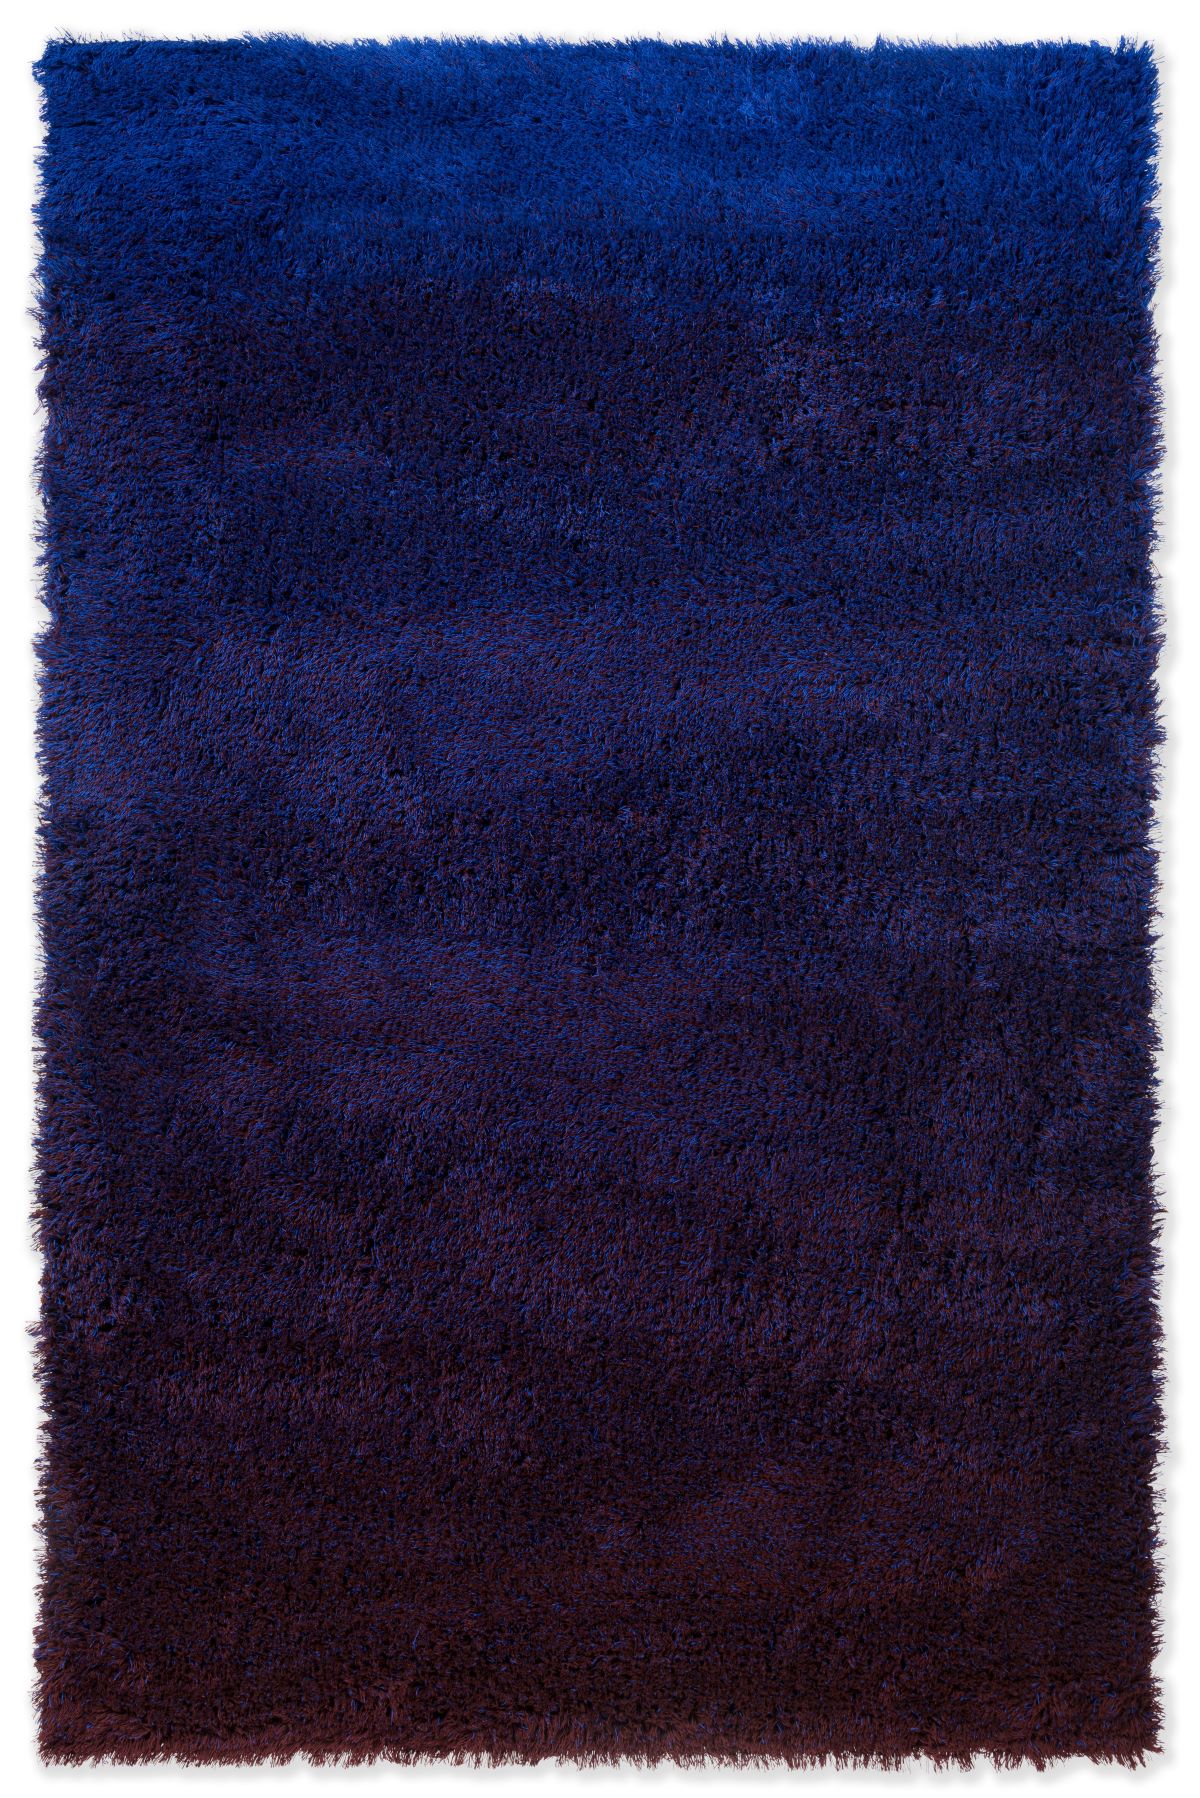 brink-and-campman-rug-shade-high-electric-blue-aubergine-011918